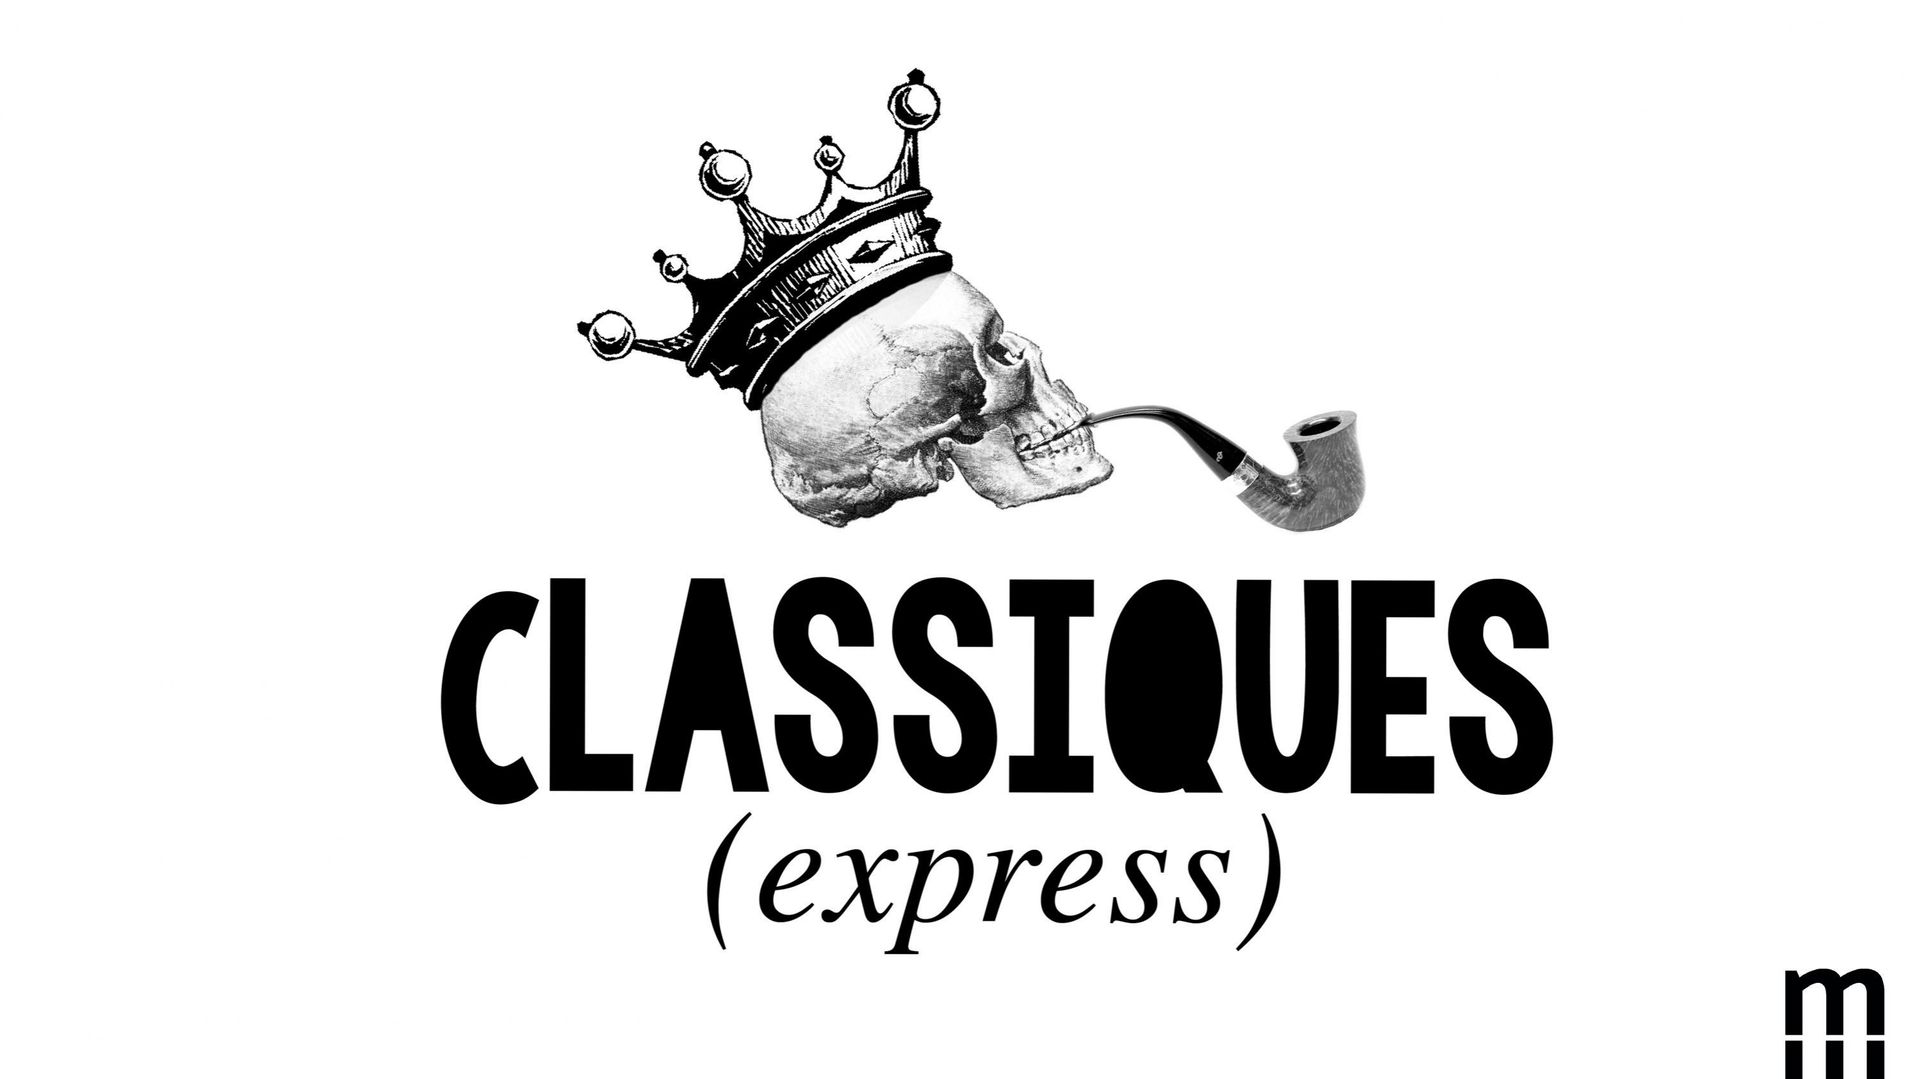 [PODCAST] Classiques (express) : 10 classiques de la littérature revisités avec humour